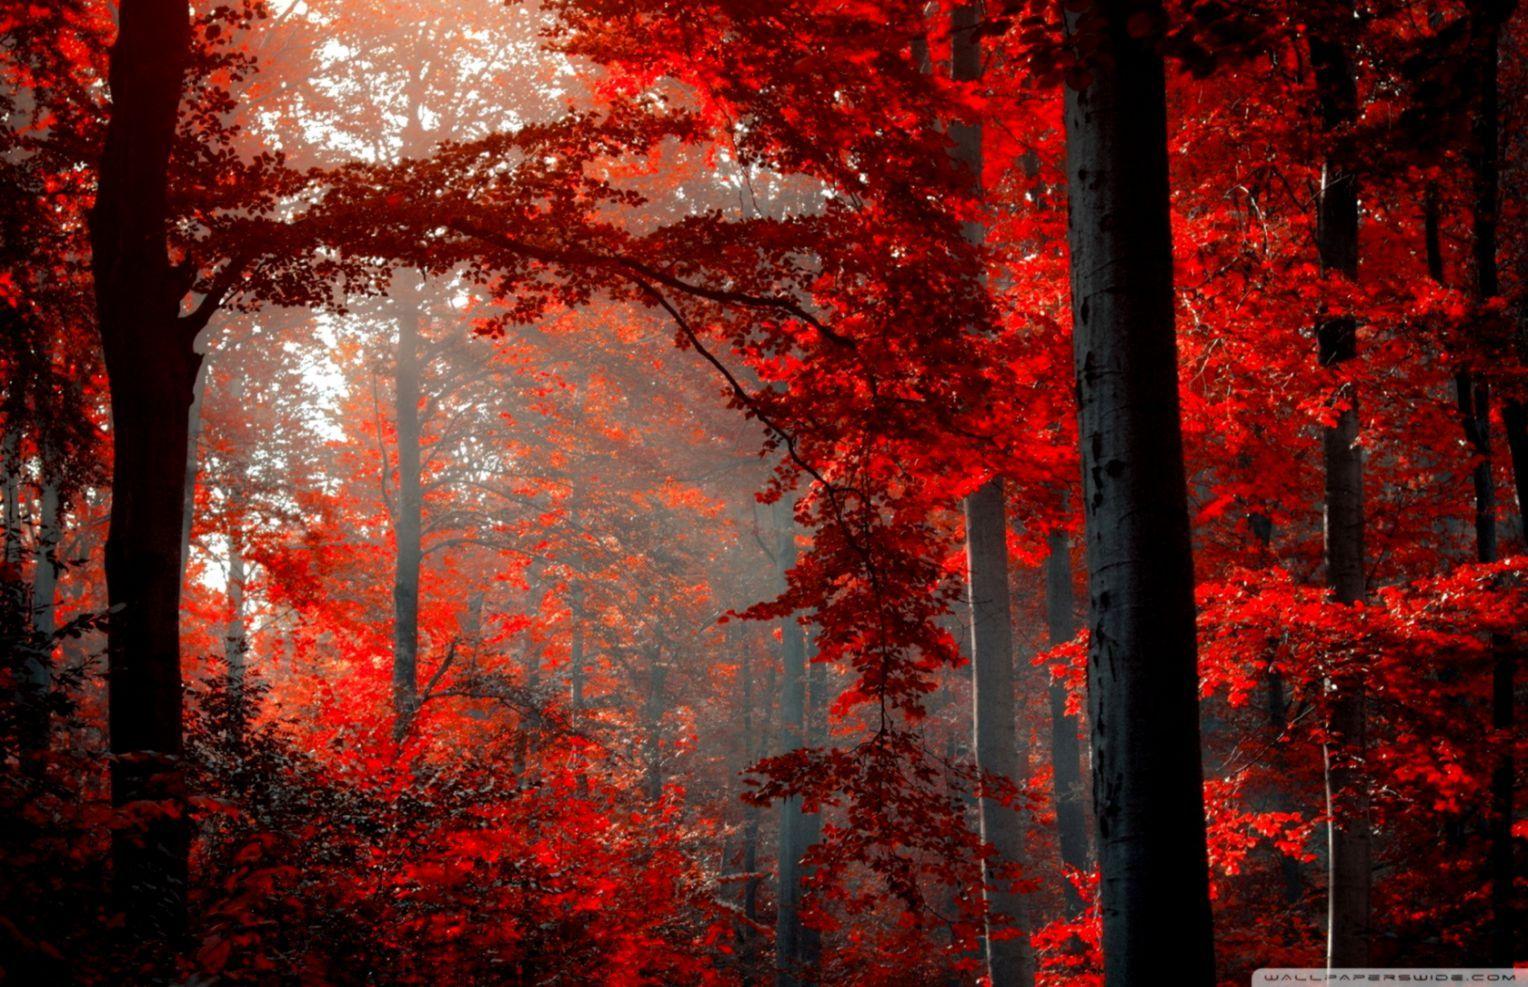 Dark Forest 4K Ultra HD Wallpapers - Top Free Dark Forest ...